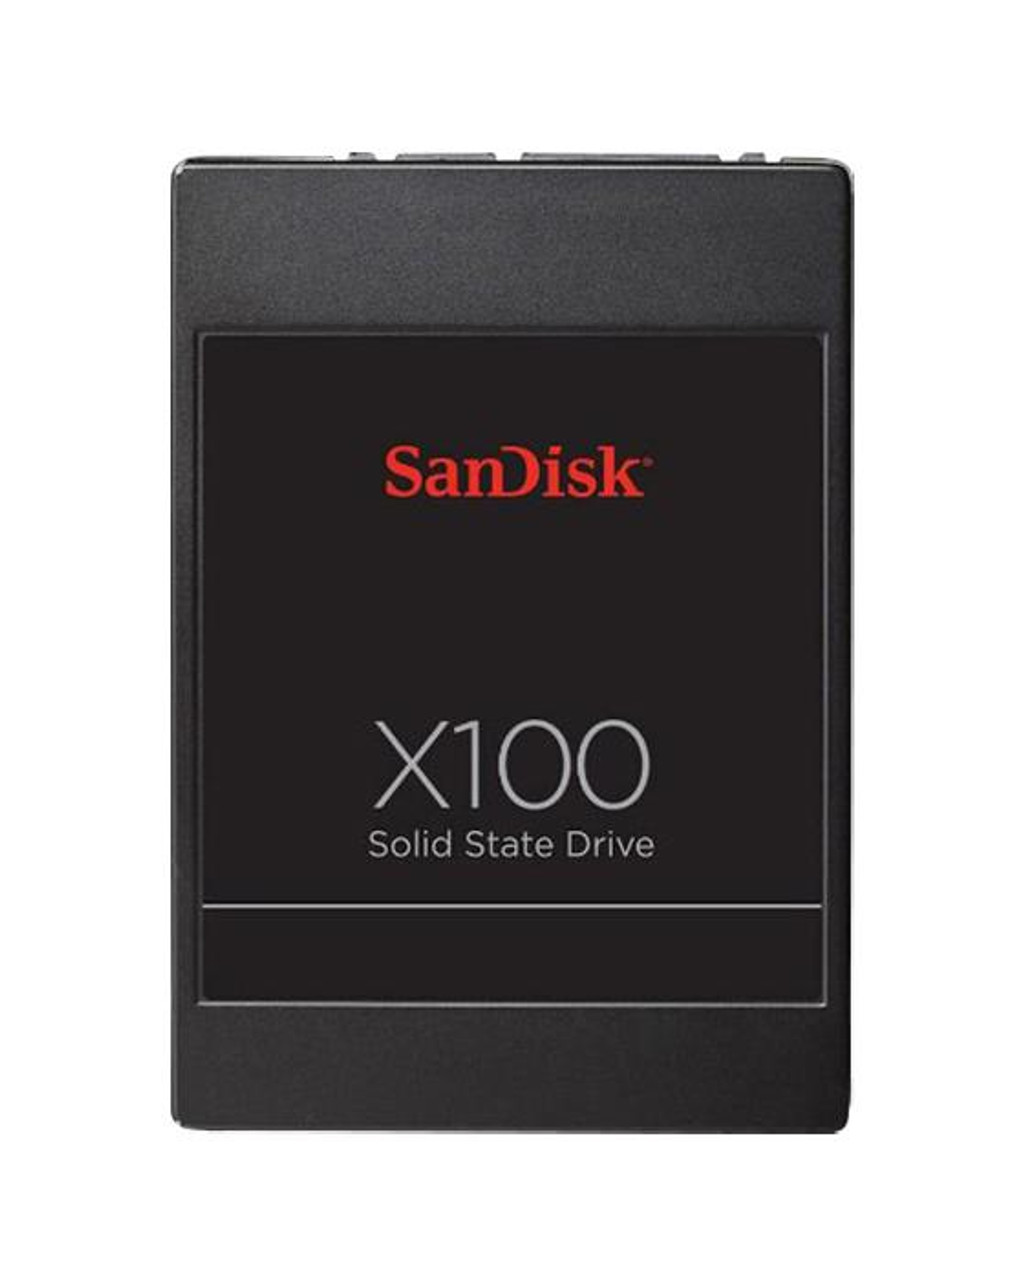 SD5SB2-064G-1010E SanDisk X100 64GB MLC SATA 6Gbps 2.5-inch Internal Solid State Drive (SSD)